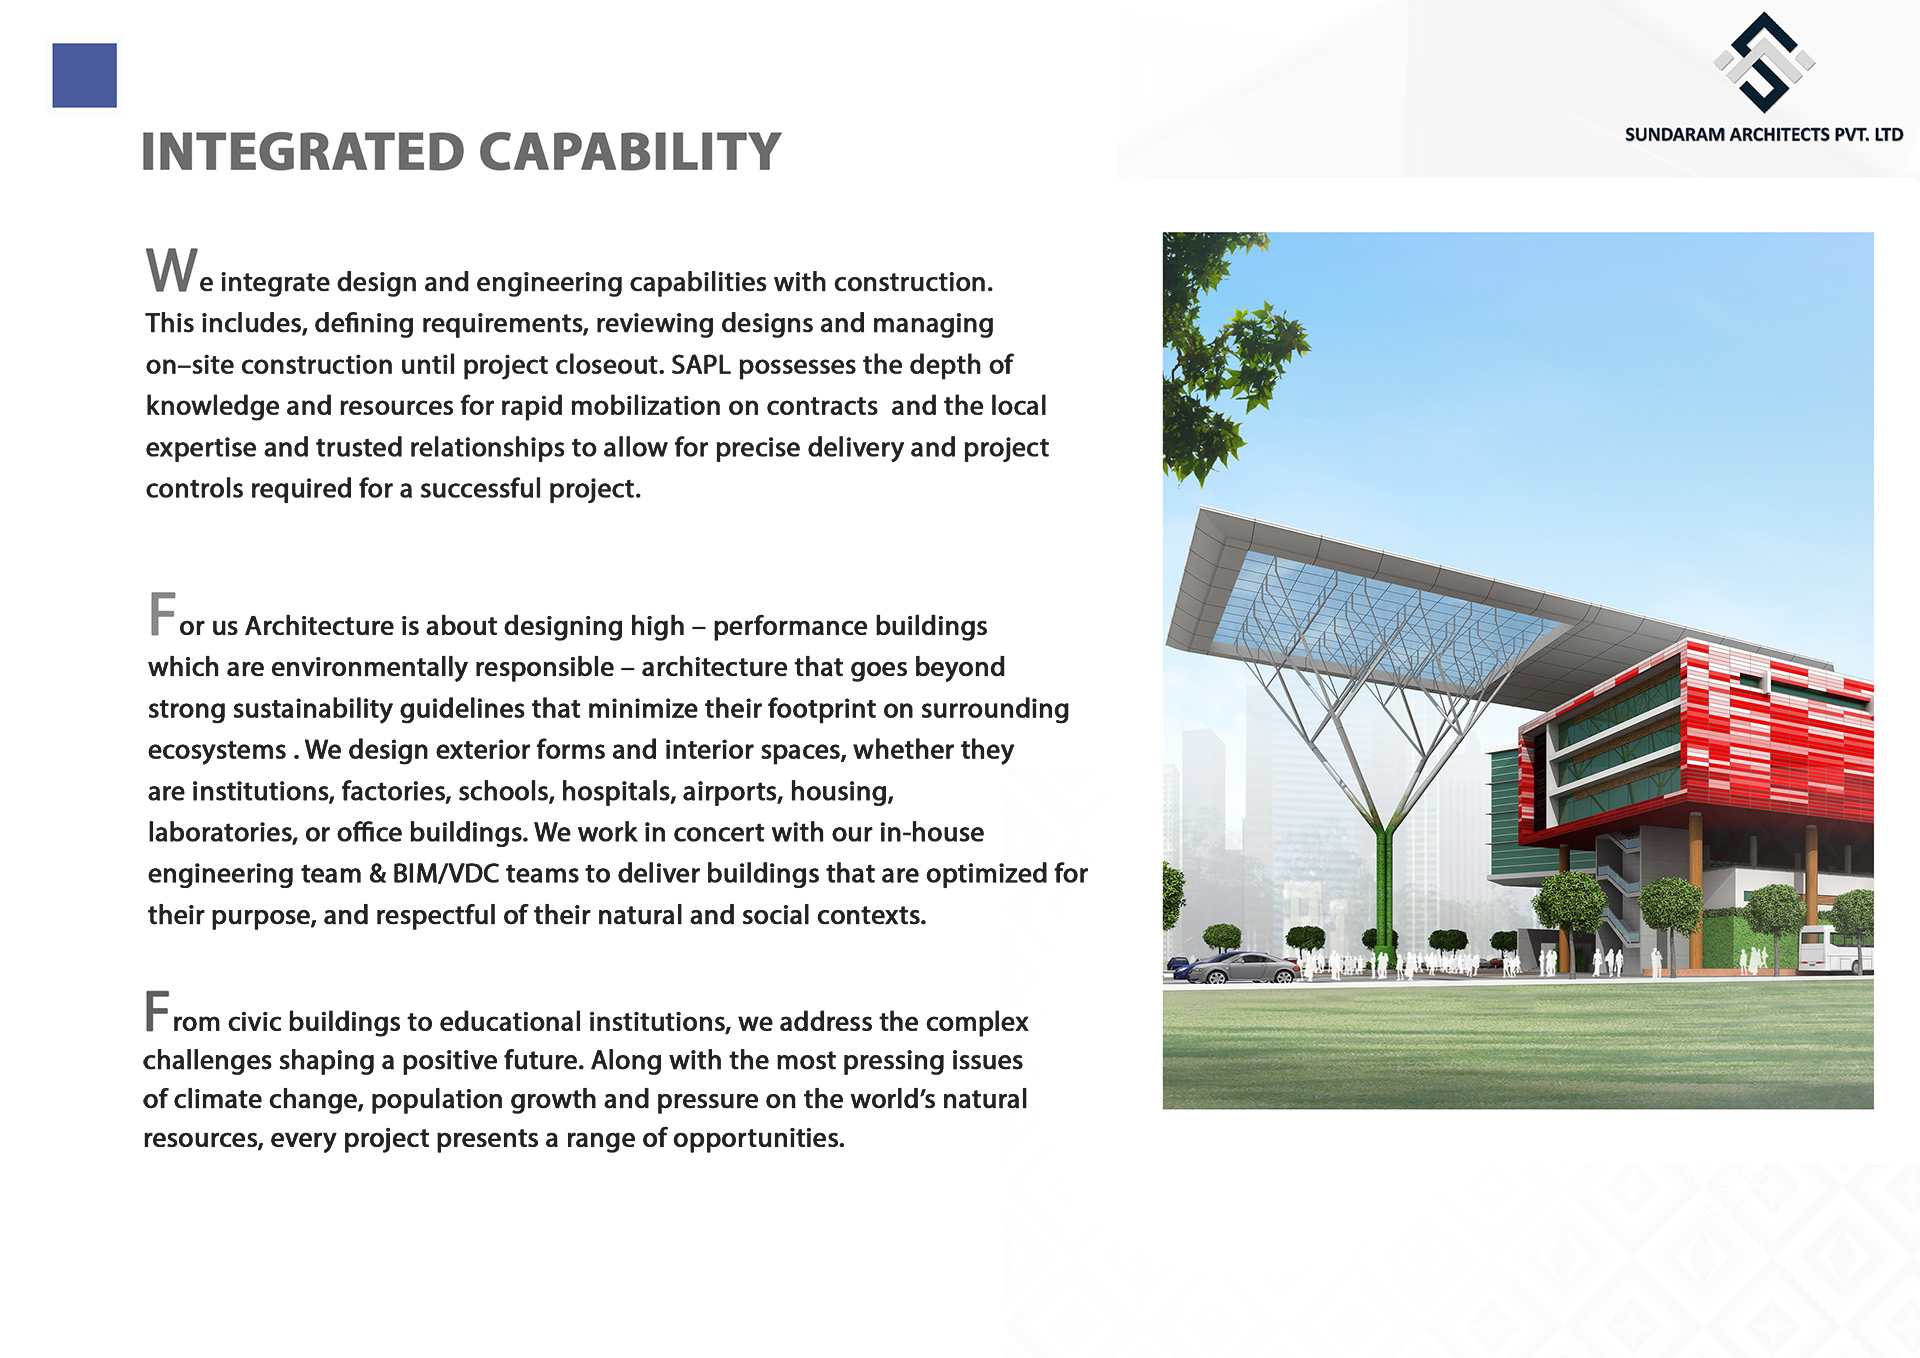 Sundaram Architects integrate design & engineering capabilities with construction